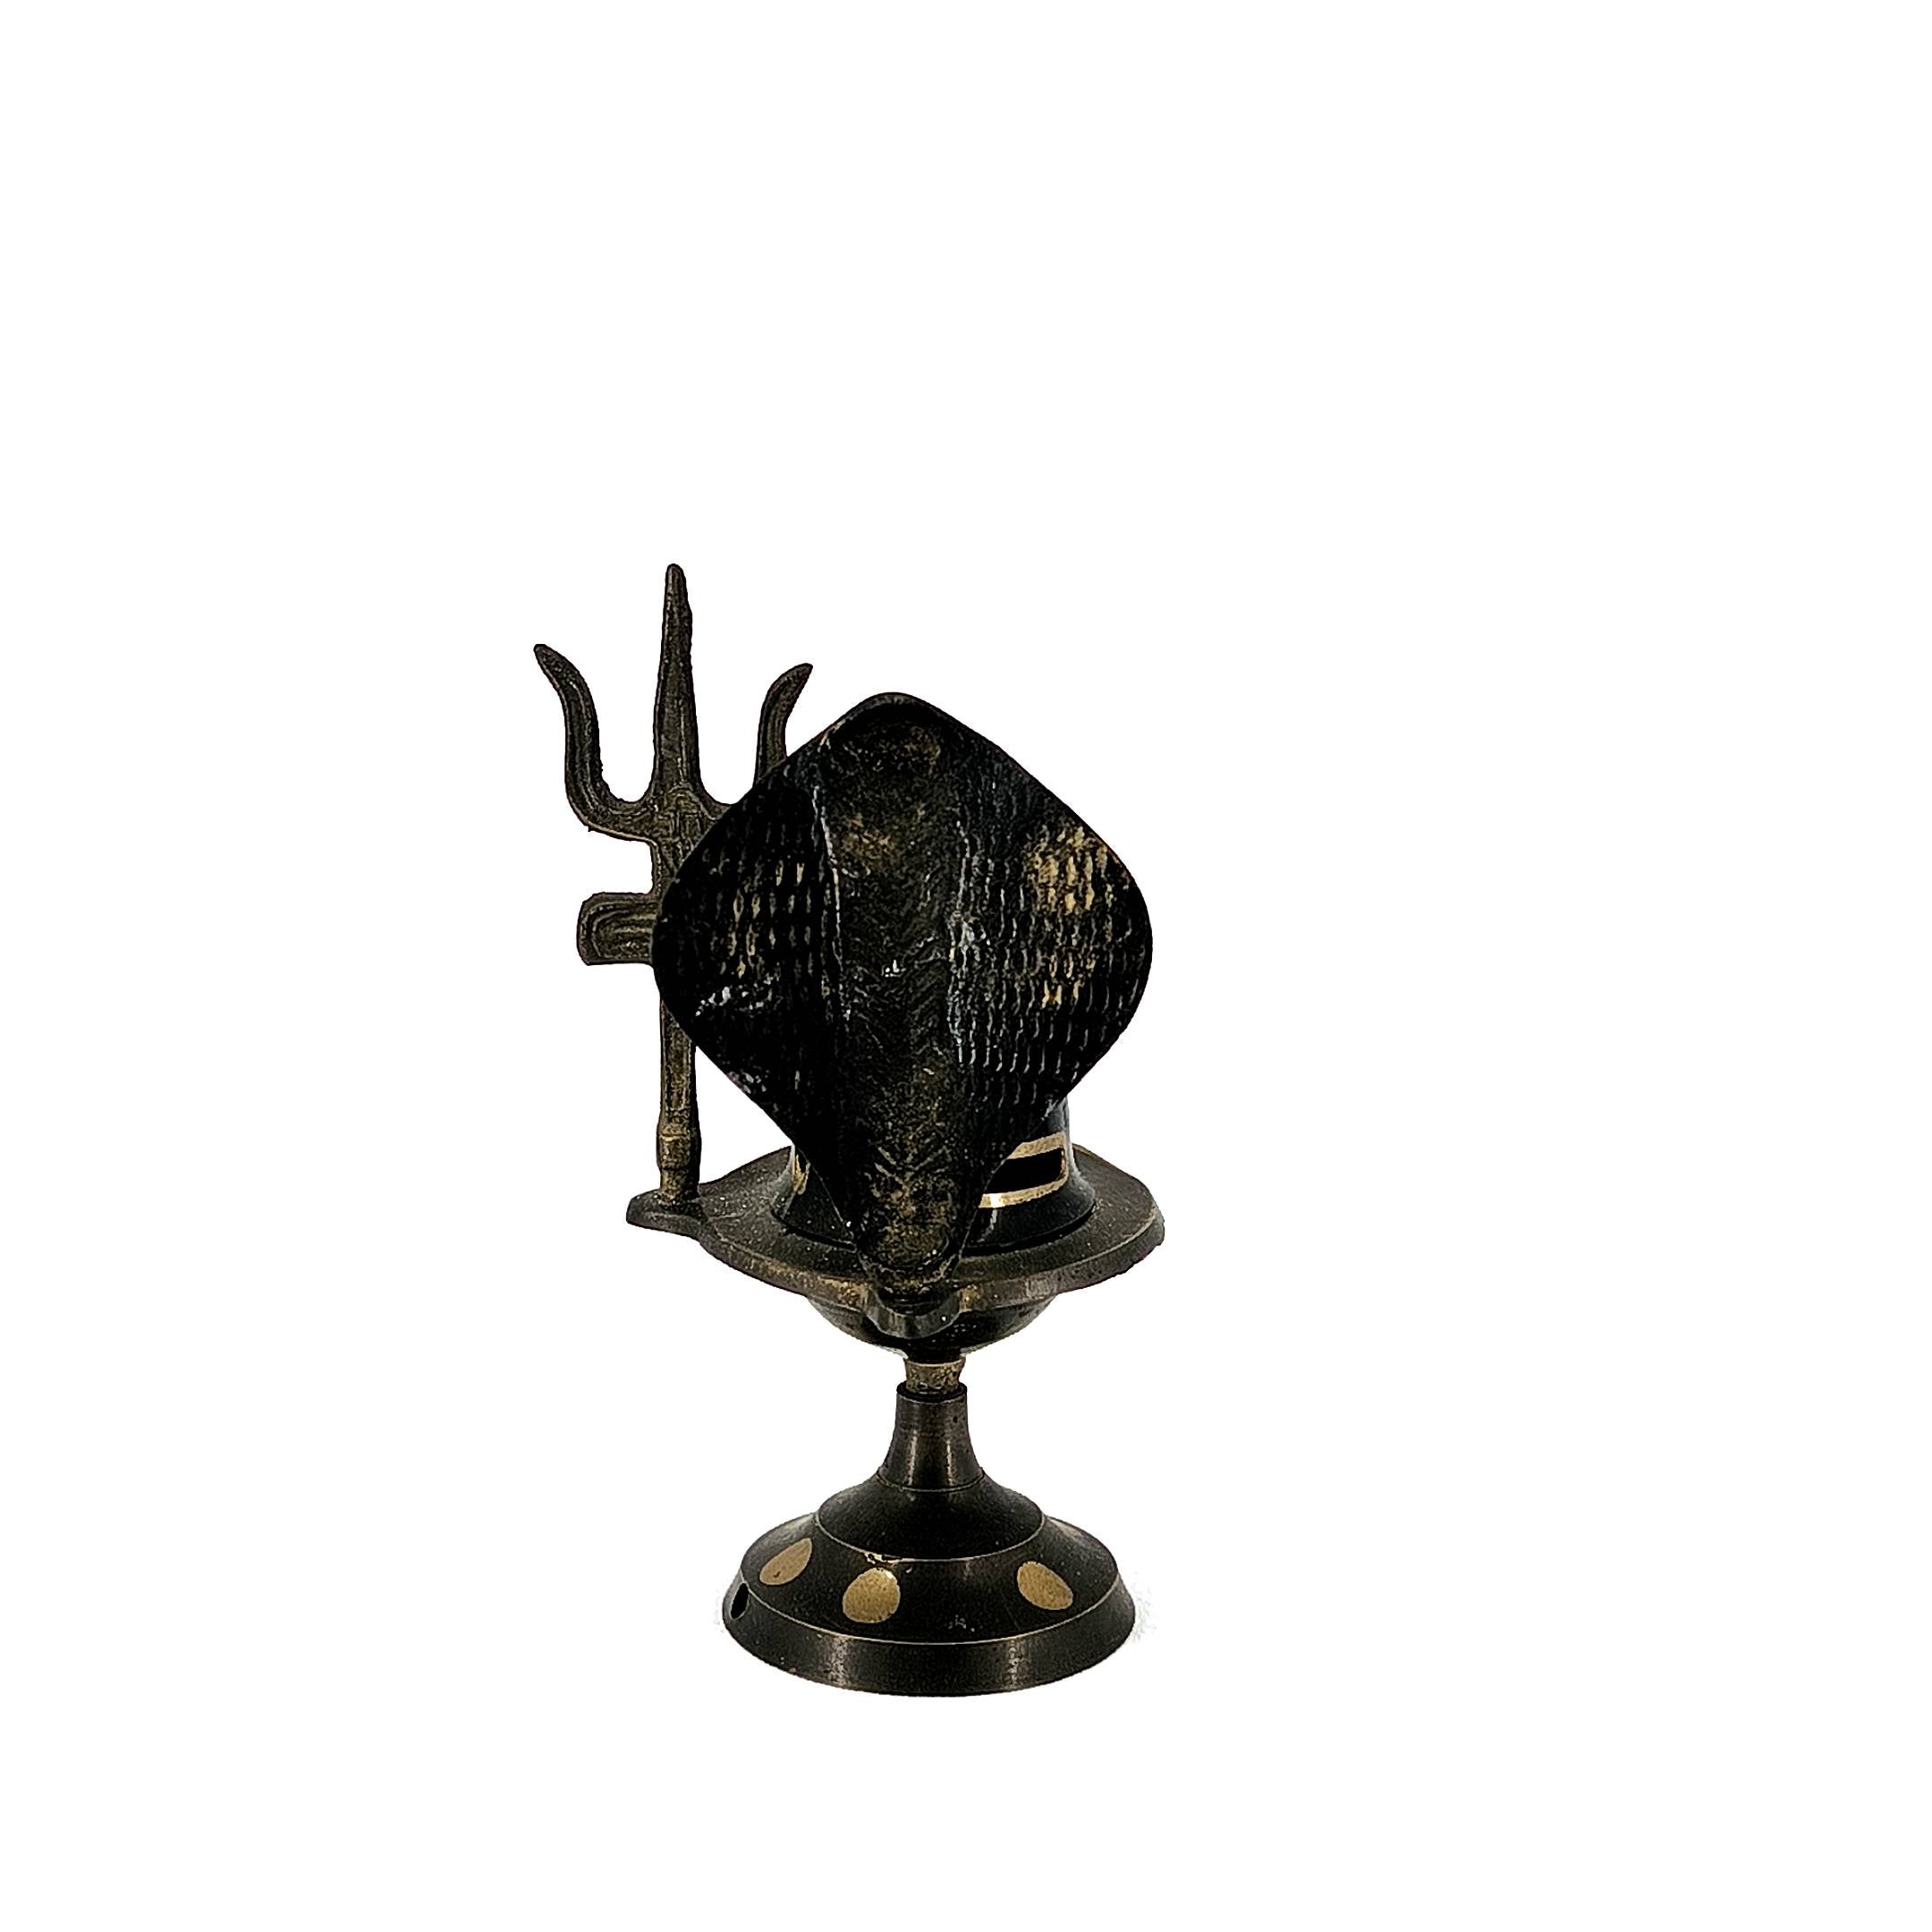 Antique Brass God Shiva Lingam Original Old Handcrafted Engraved